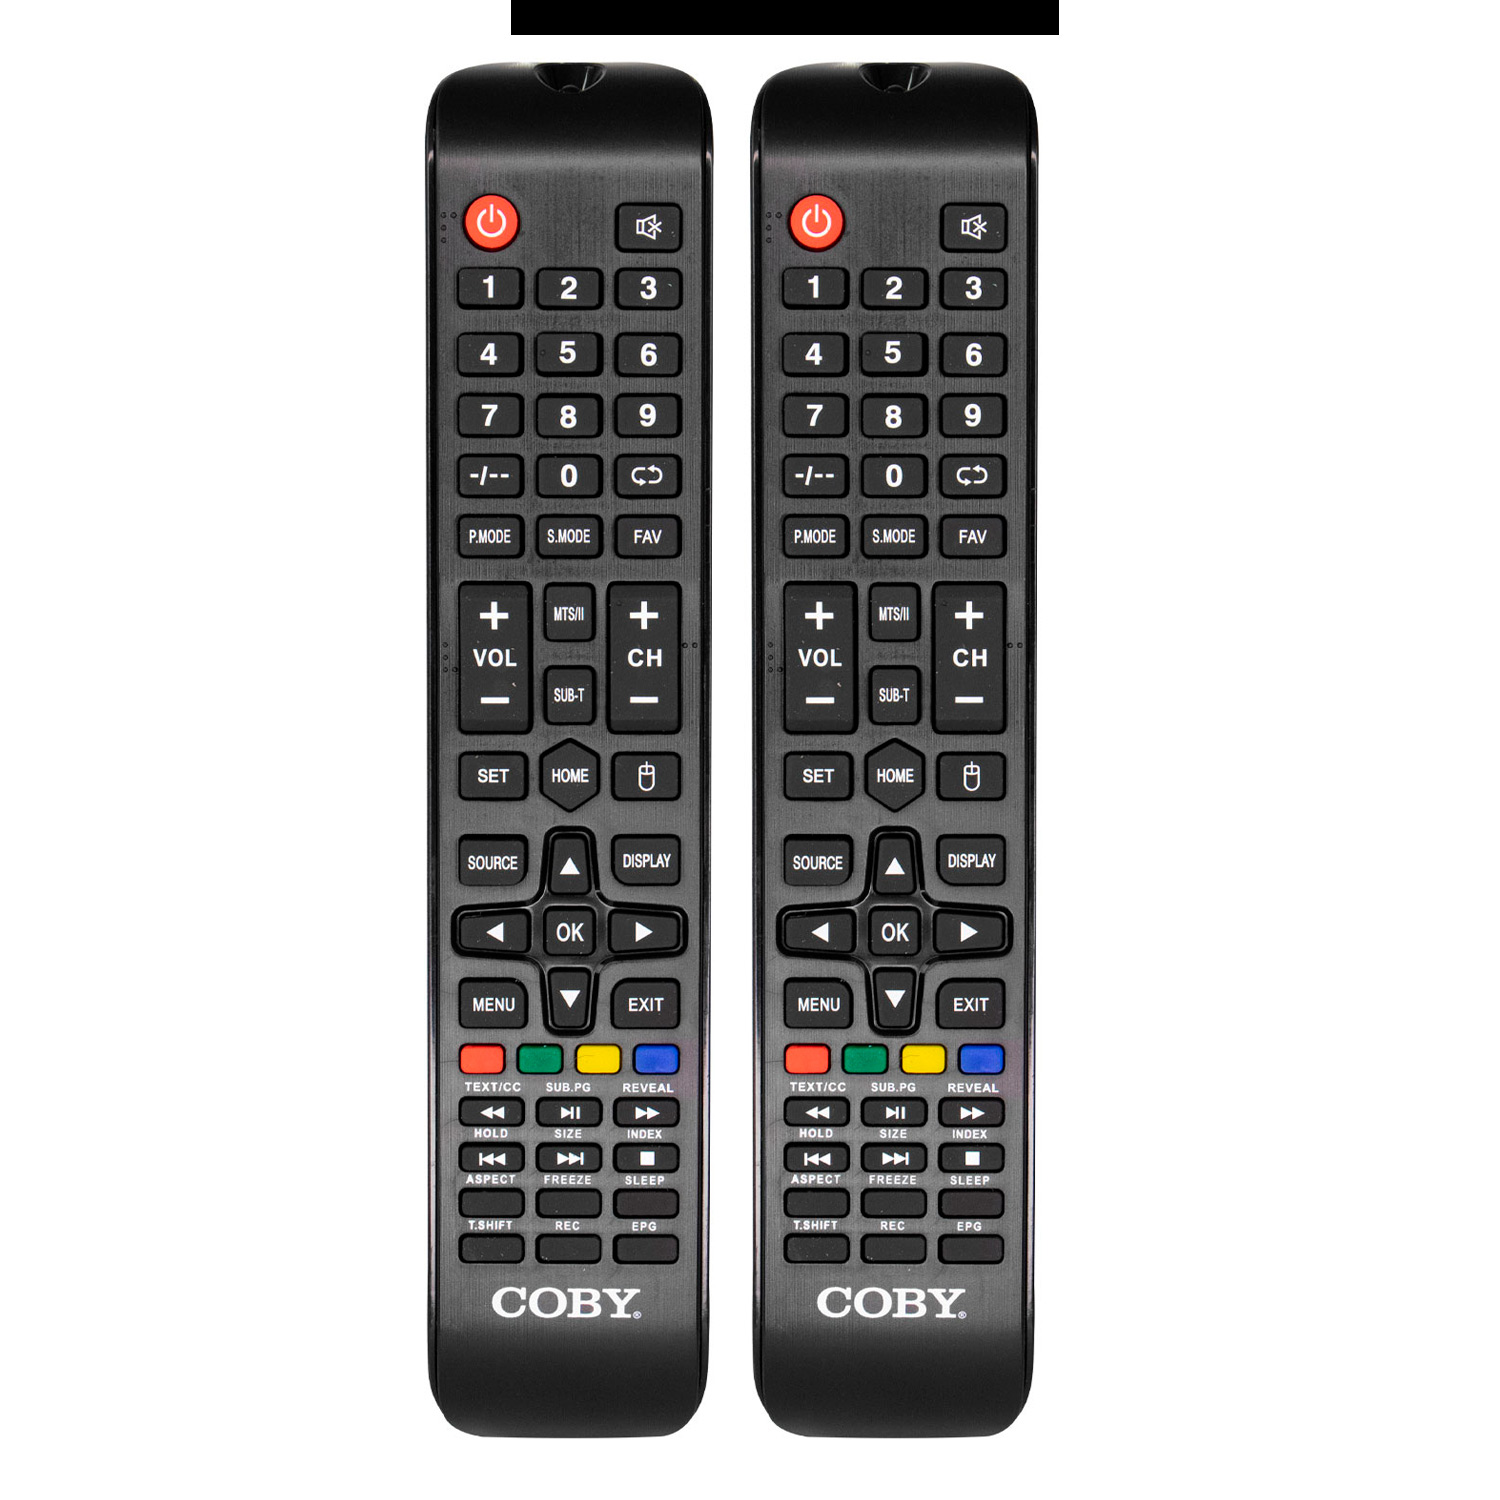 Smart TV Coby CY3359-32FL 32" Full HD Android WiFi - Preto
